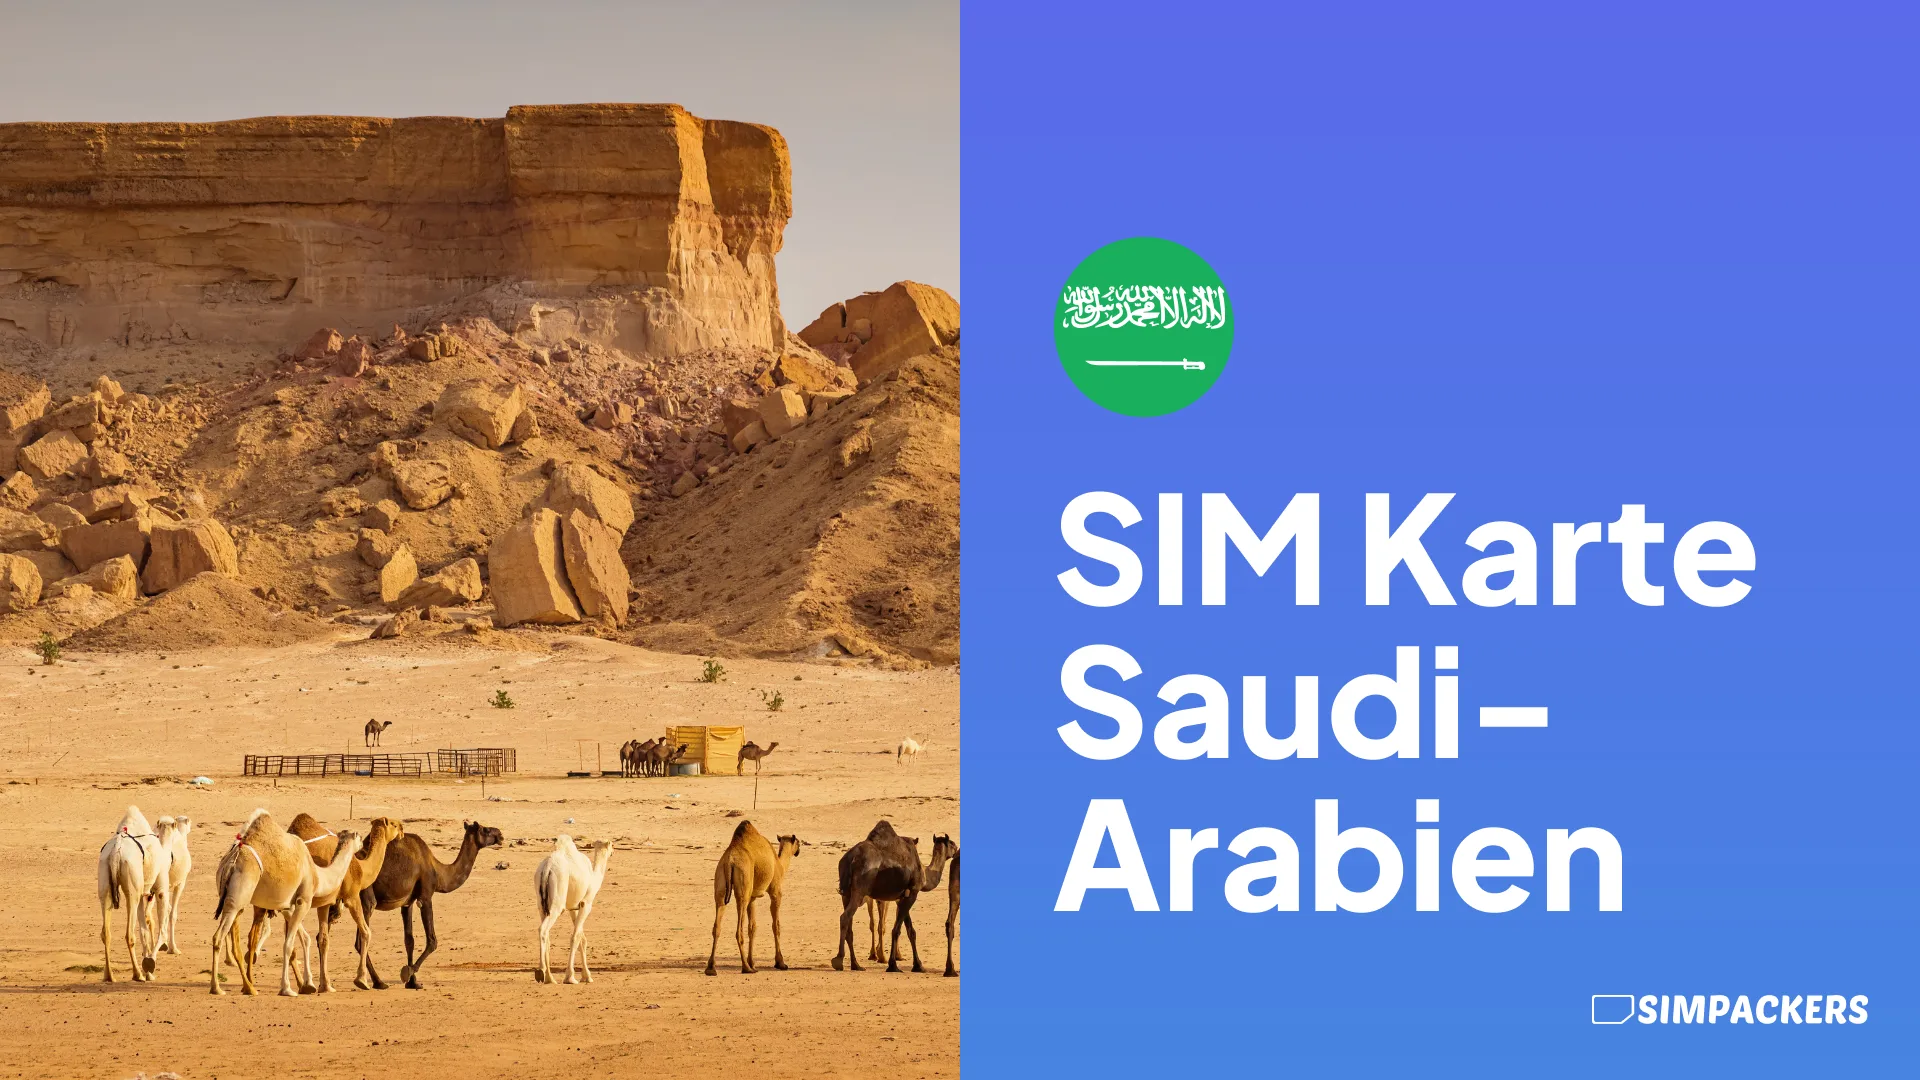 DE/FEATURED_IMAGES/sim-karte-saudi-arabien.webp